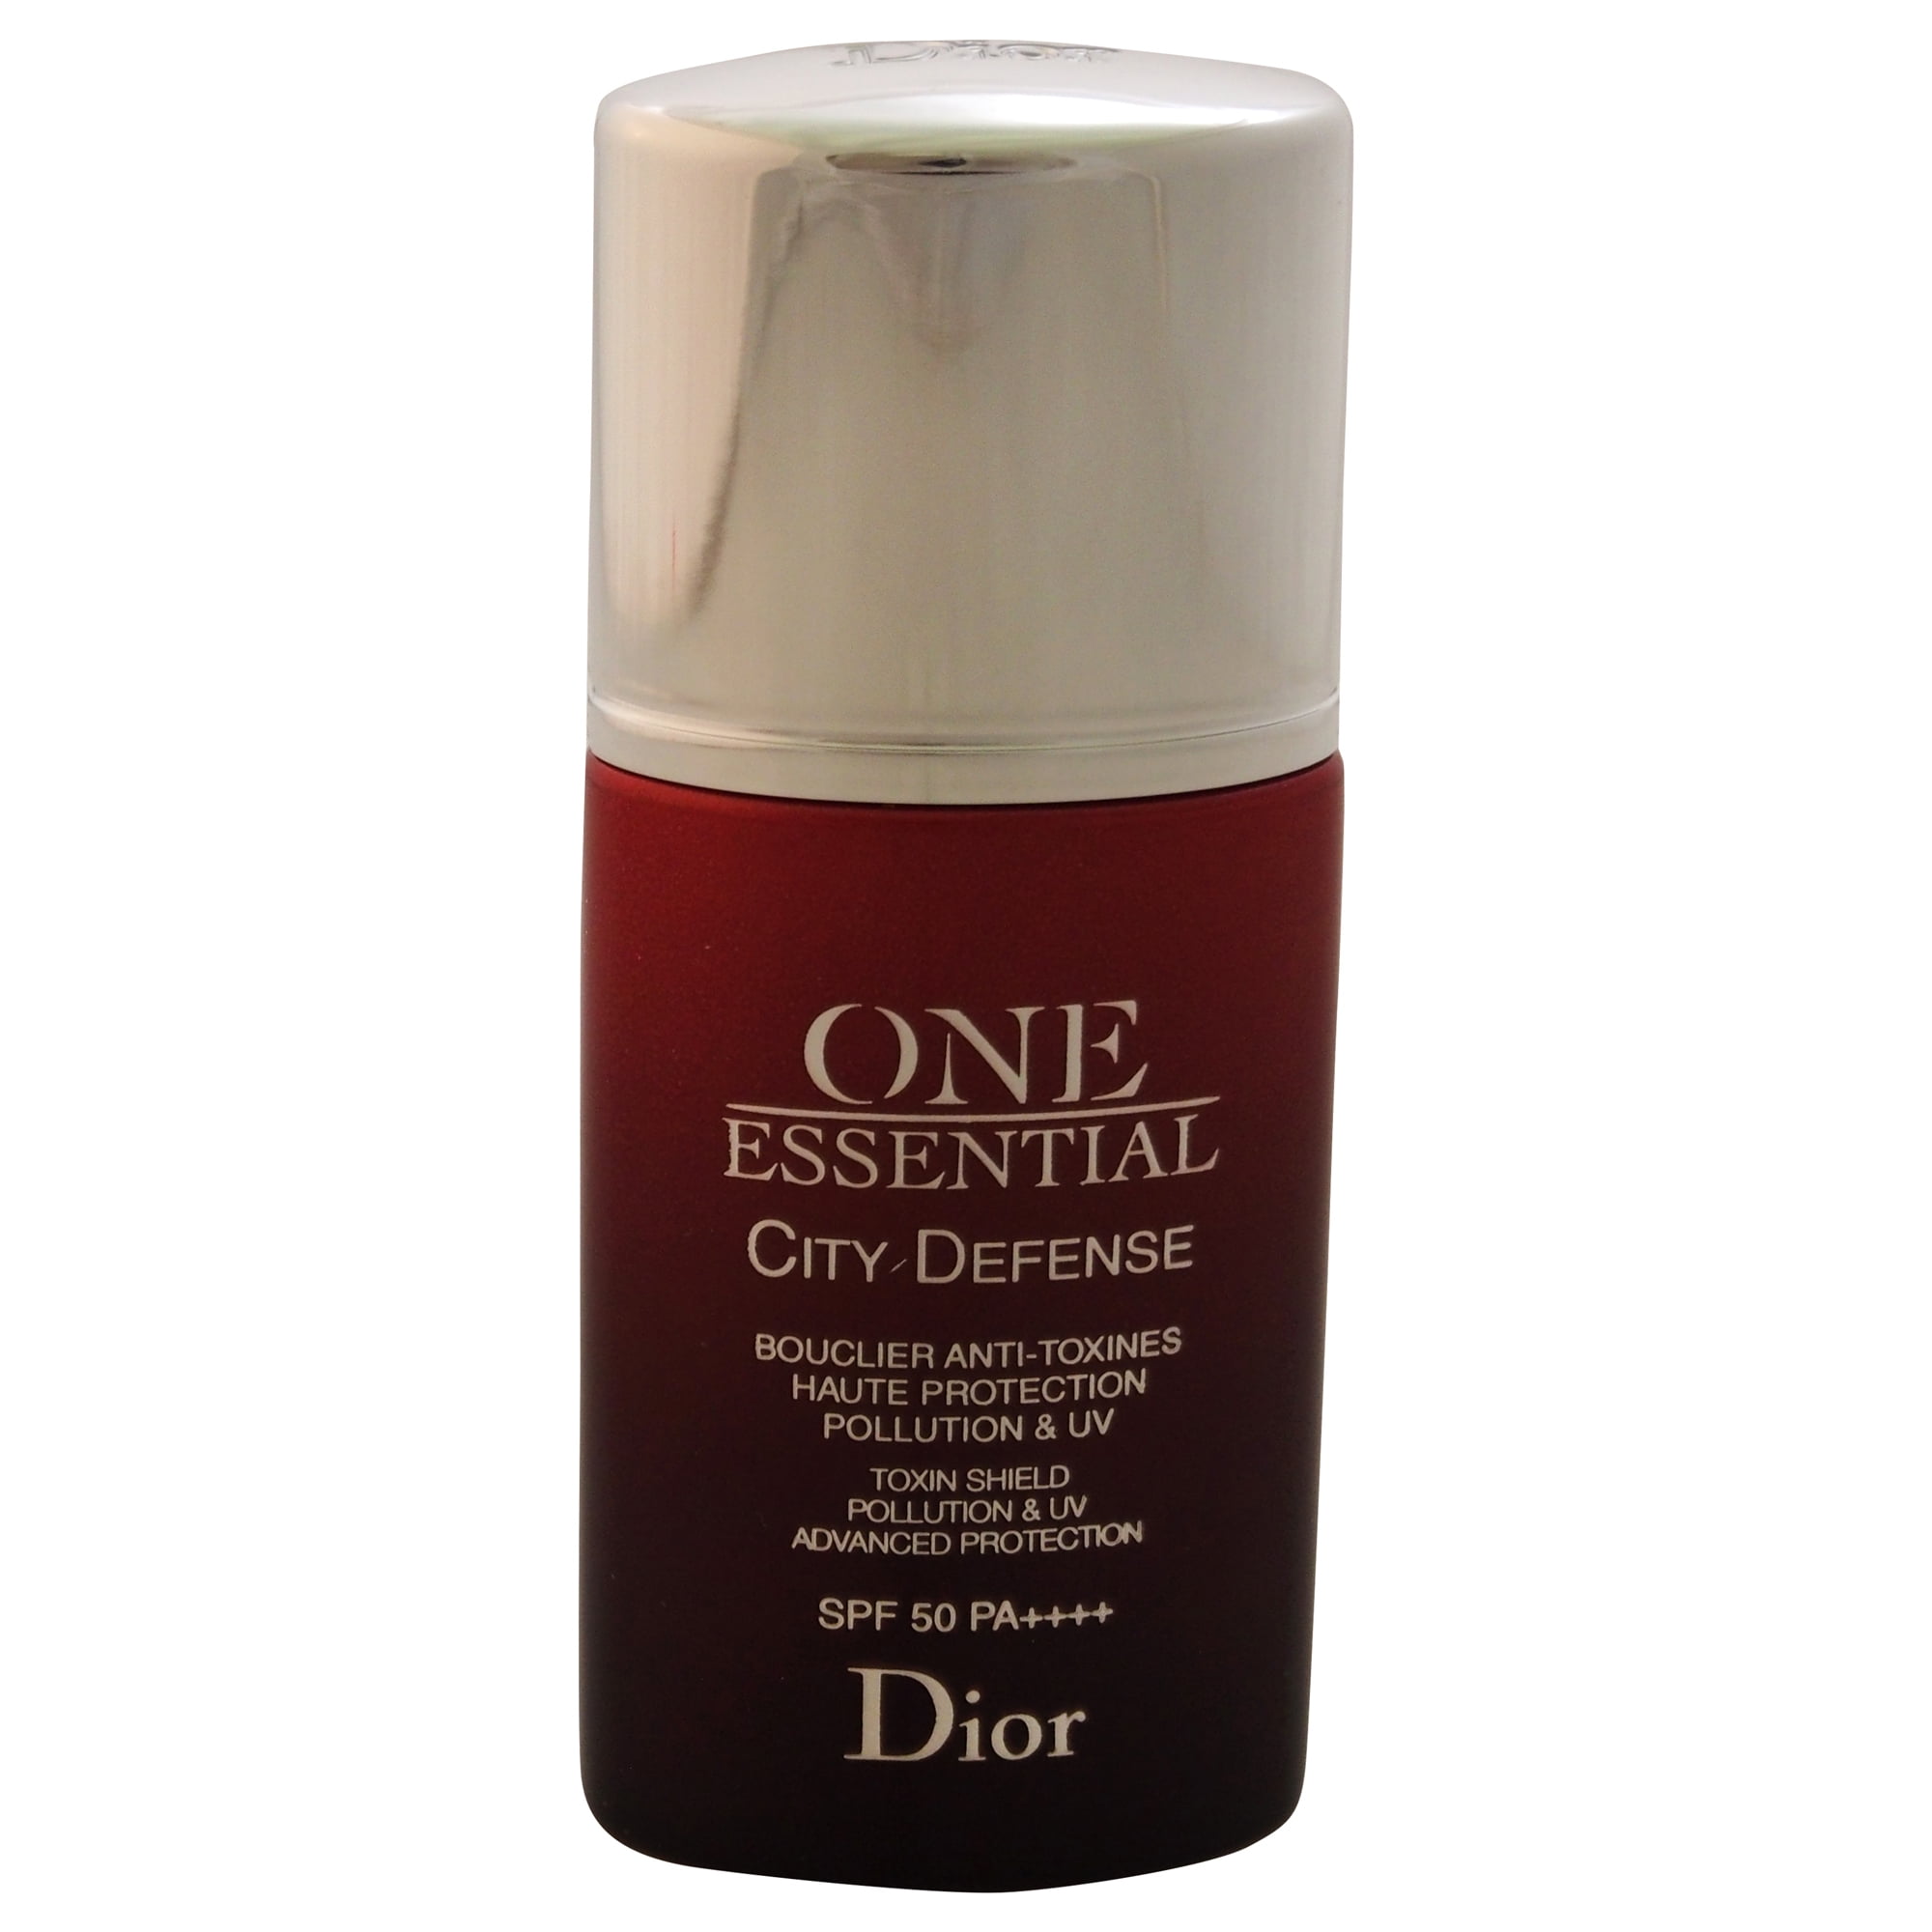 dior one essential city defense spf 50 ingredients